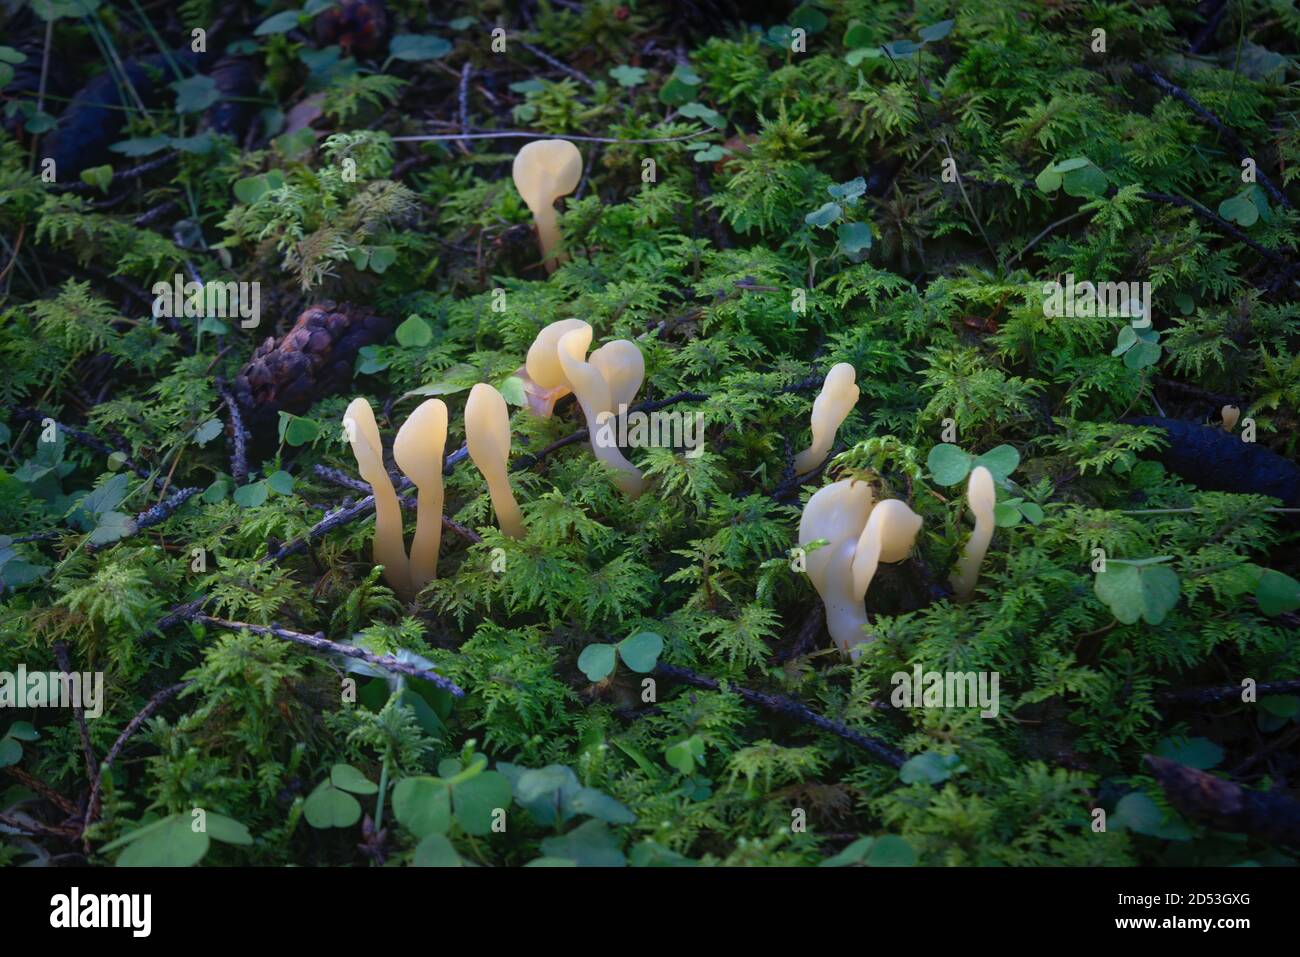 Clavariadelphus ligula is an edible mushroom from the genus Clavariadelphus. Stock Photo